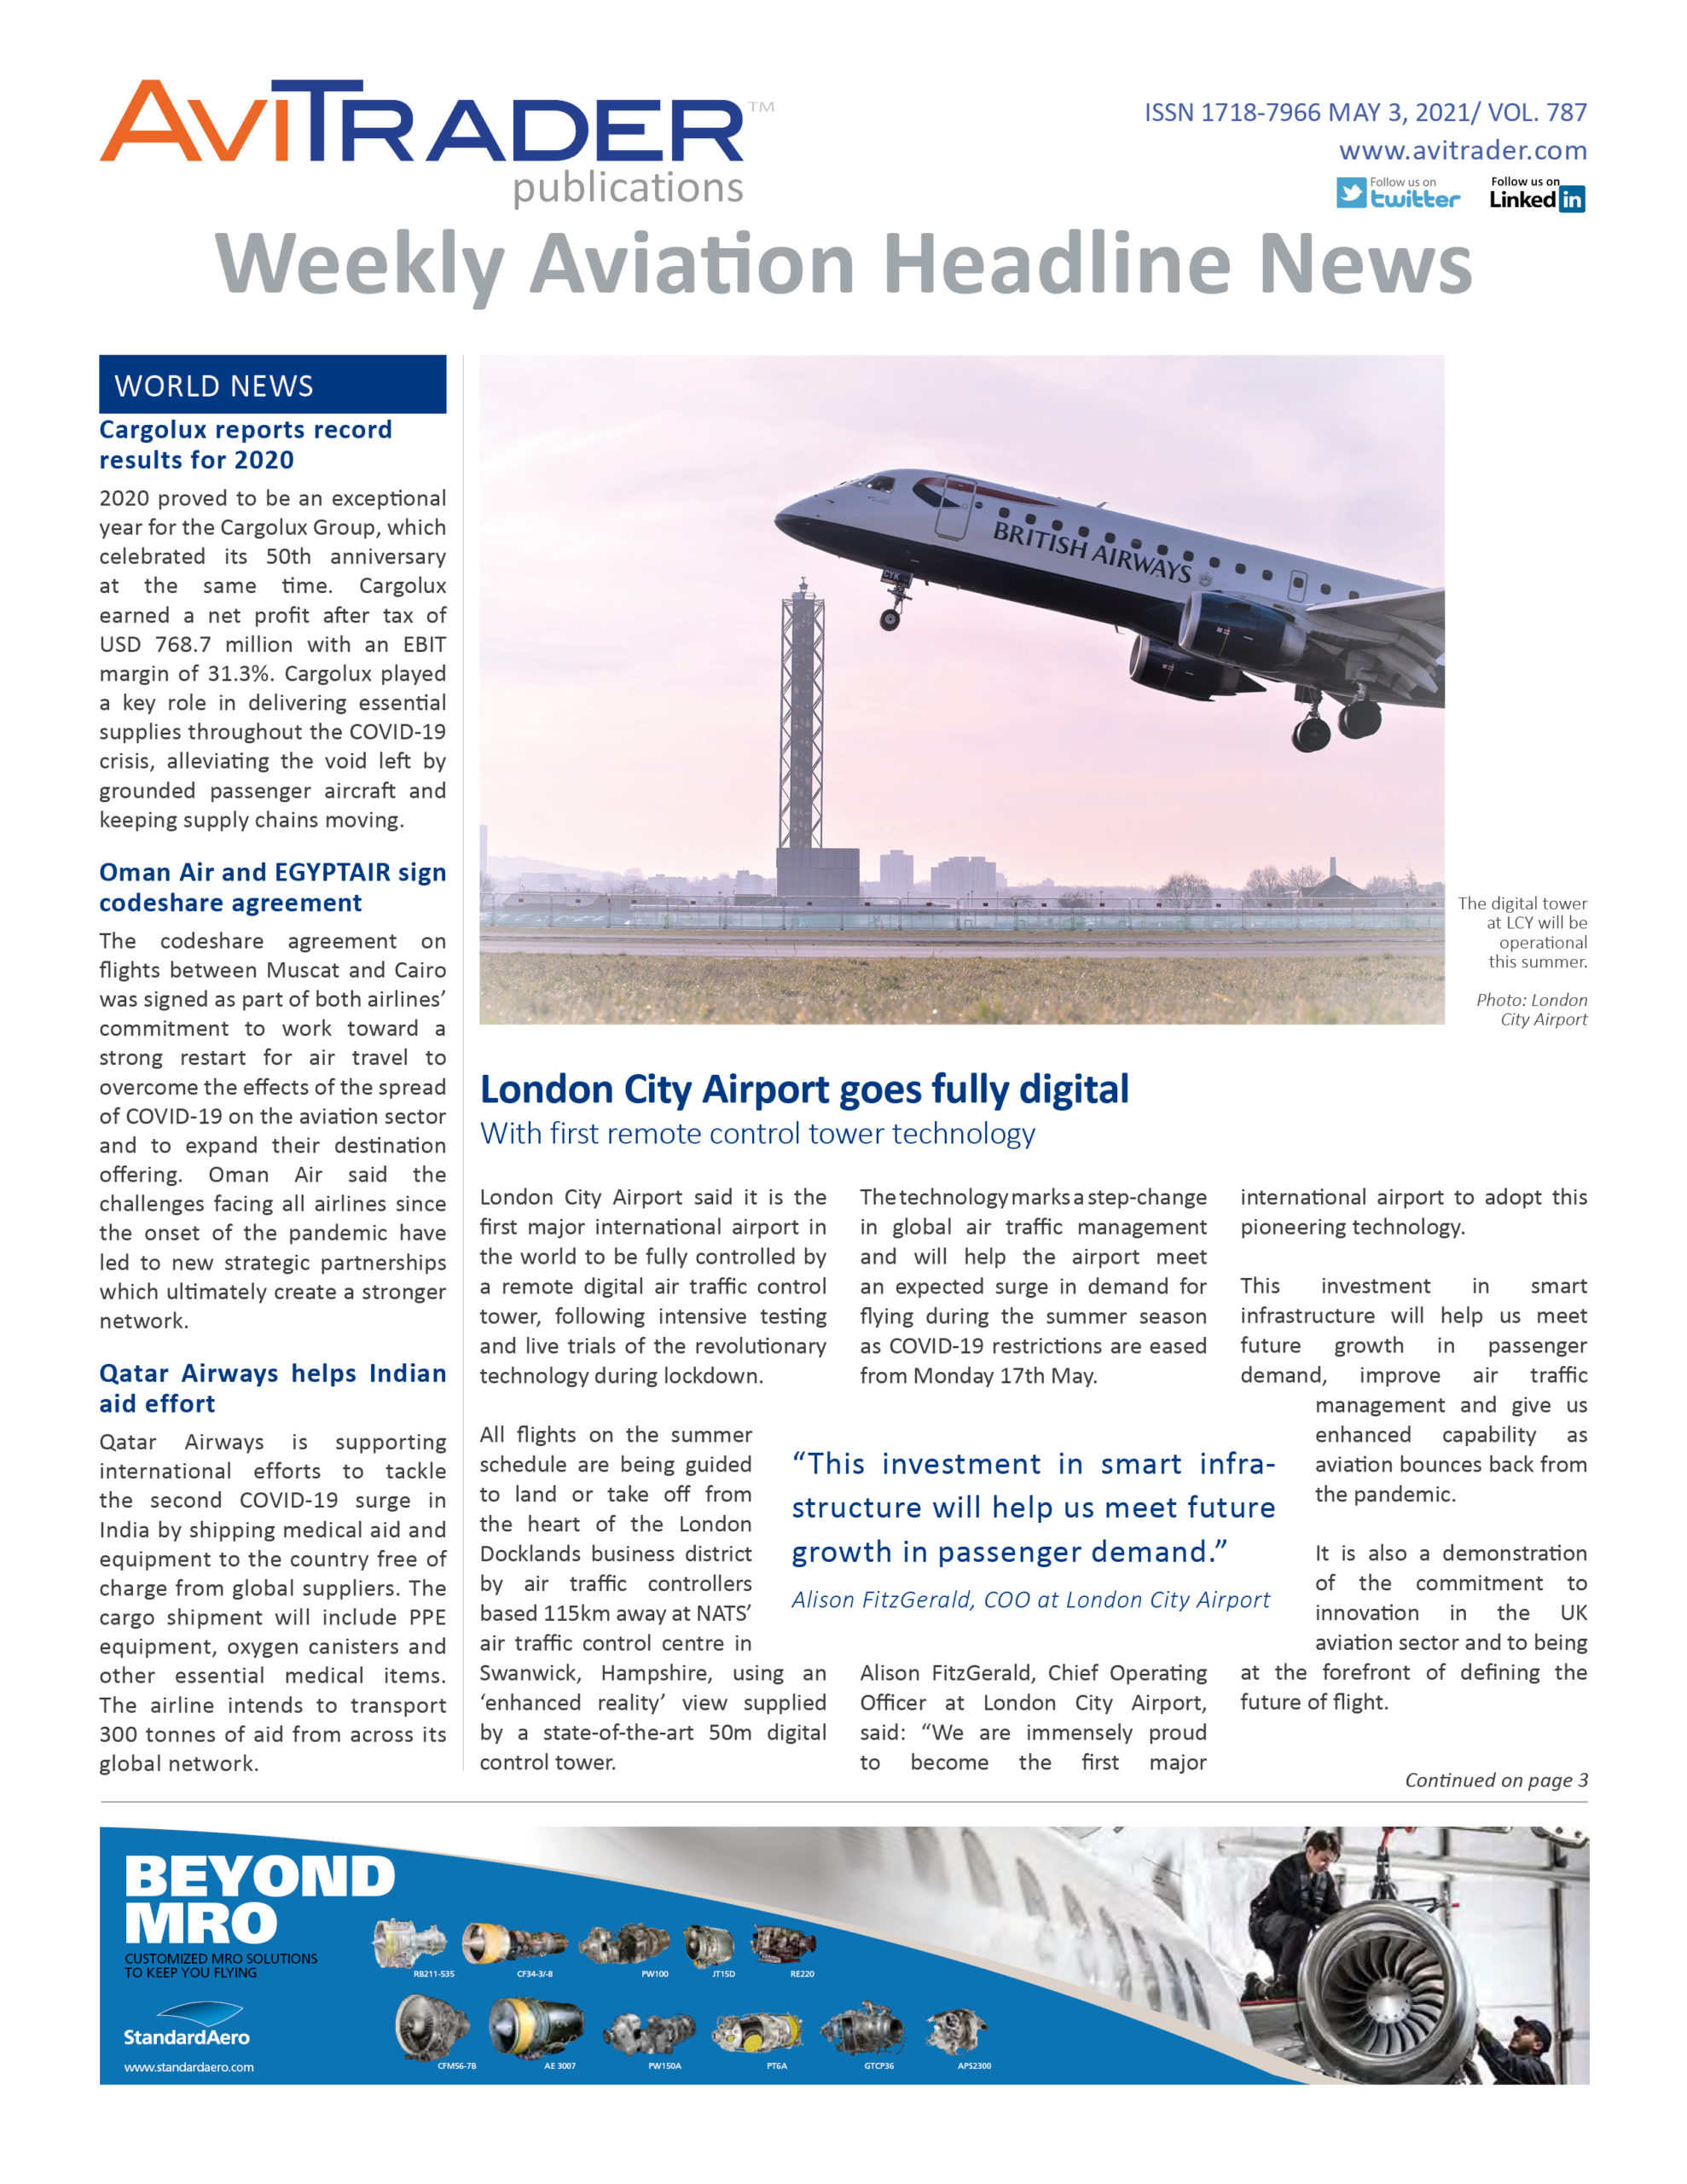 AviTrader_Weekly_Headline_News_Cover_2021-05-03